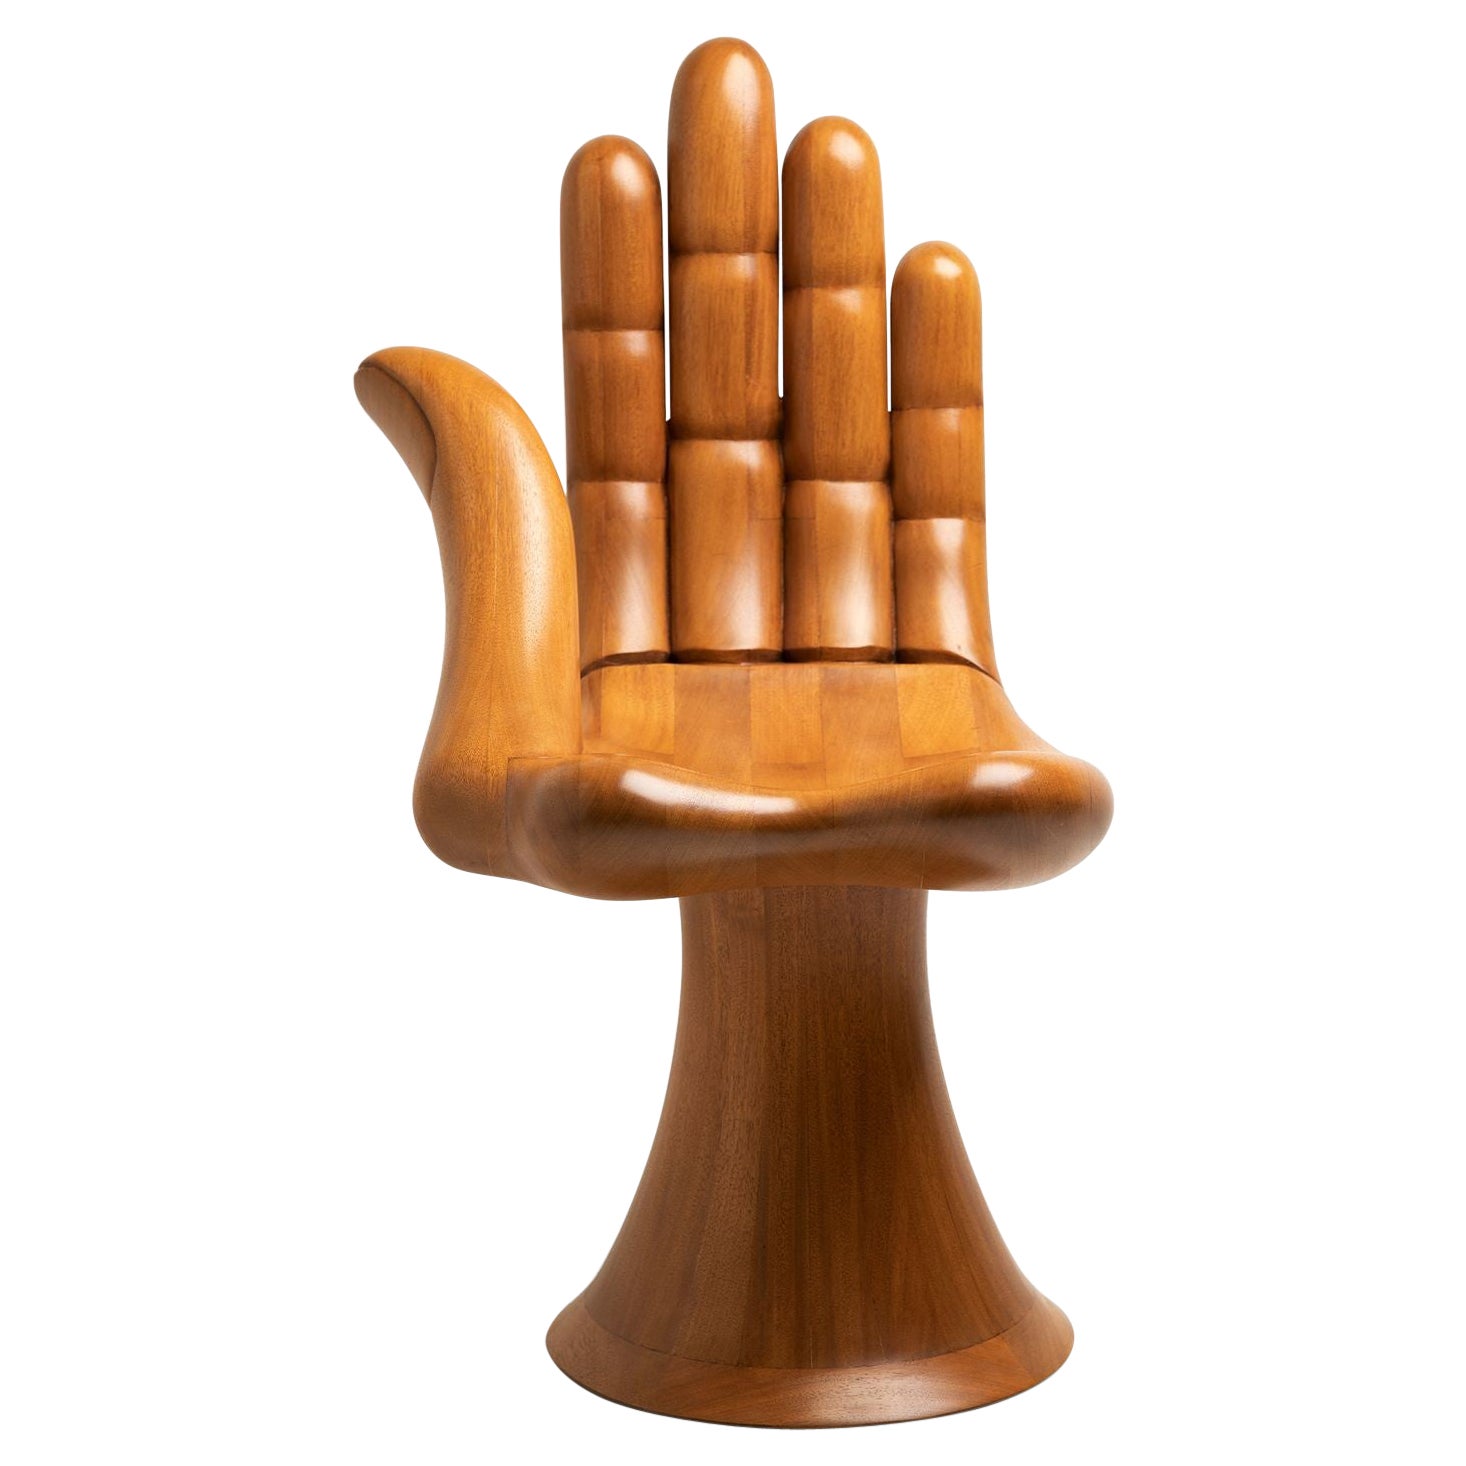 Pedro Friedeberg Hand Chair in Solid Honduran Mahogany 1960s Signed